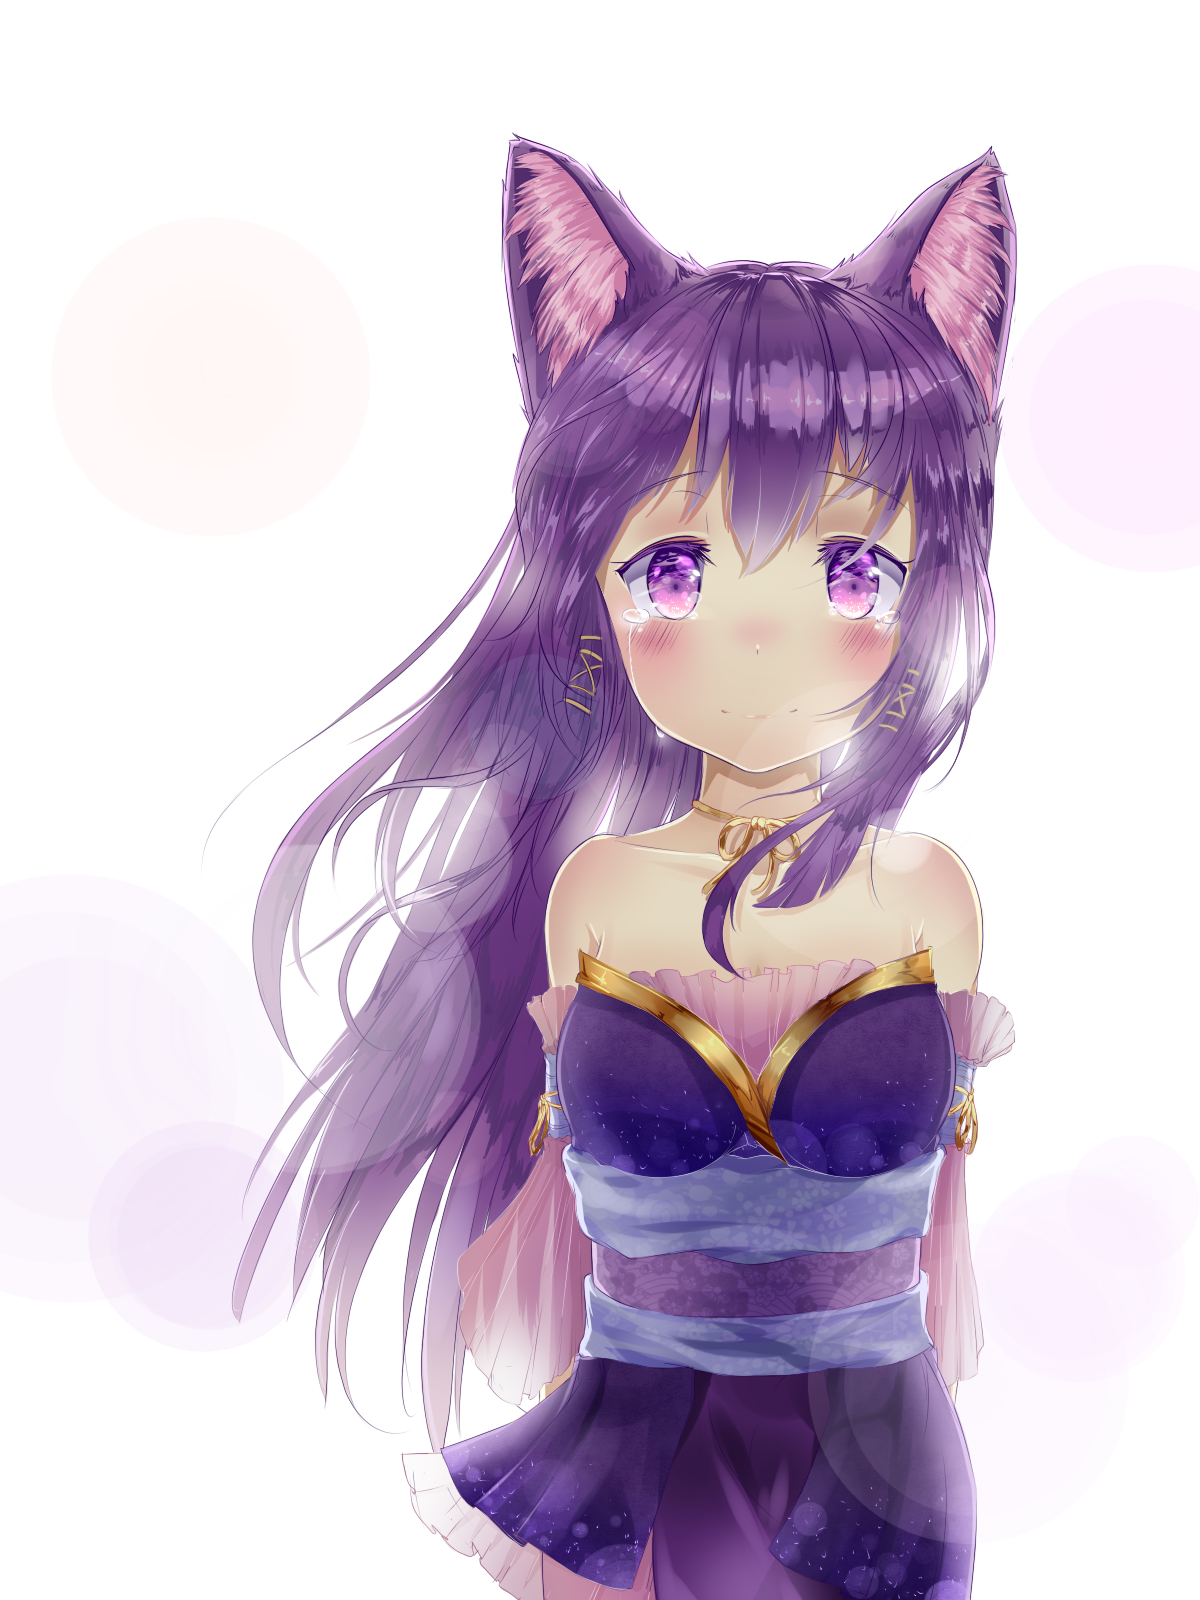 anime girl with purple hair and bangs